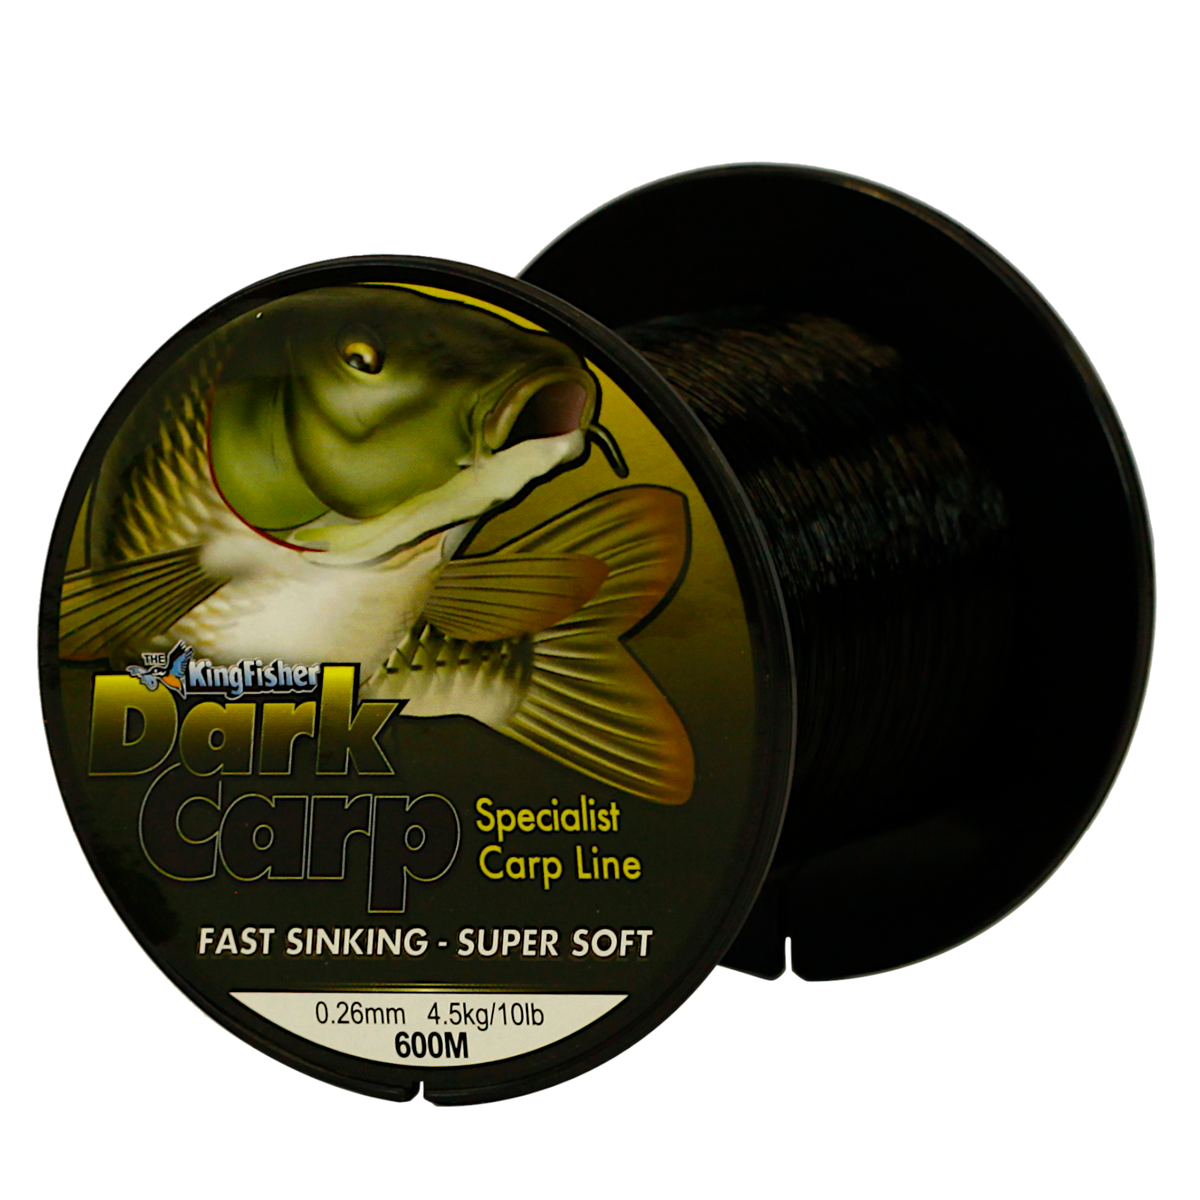 Kingfisher DARK CARP Nylon Fishing Line .26MM, 4.5KG/10LB, Colour Black,  600M Spool, Shop Today. Get it Tomorrow!